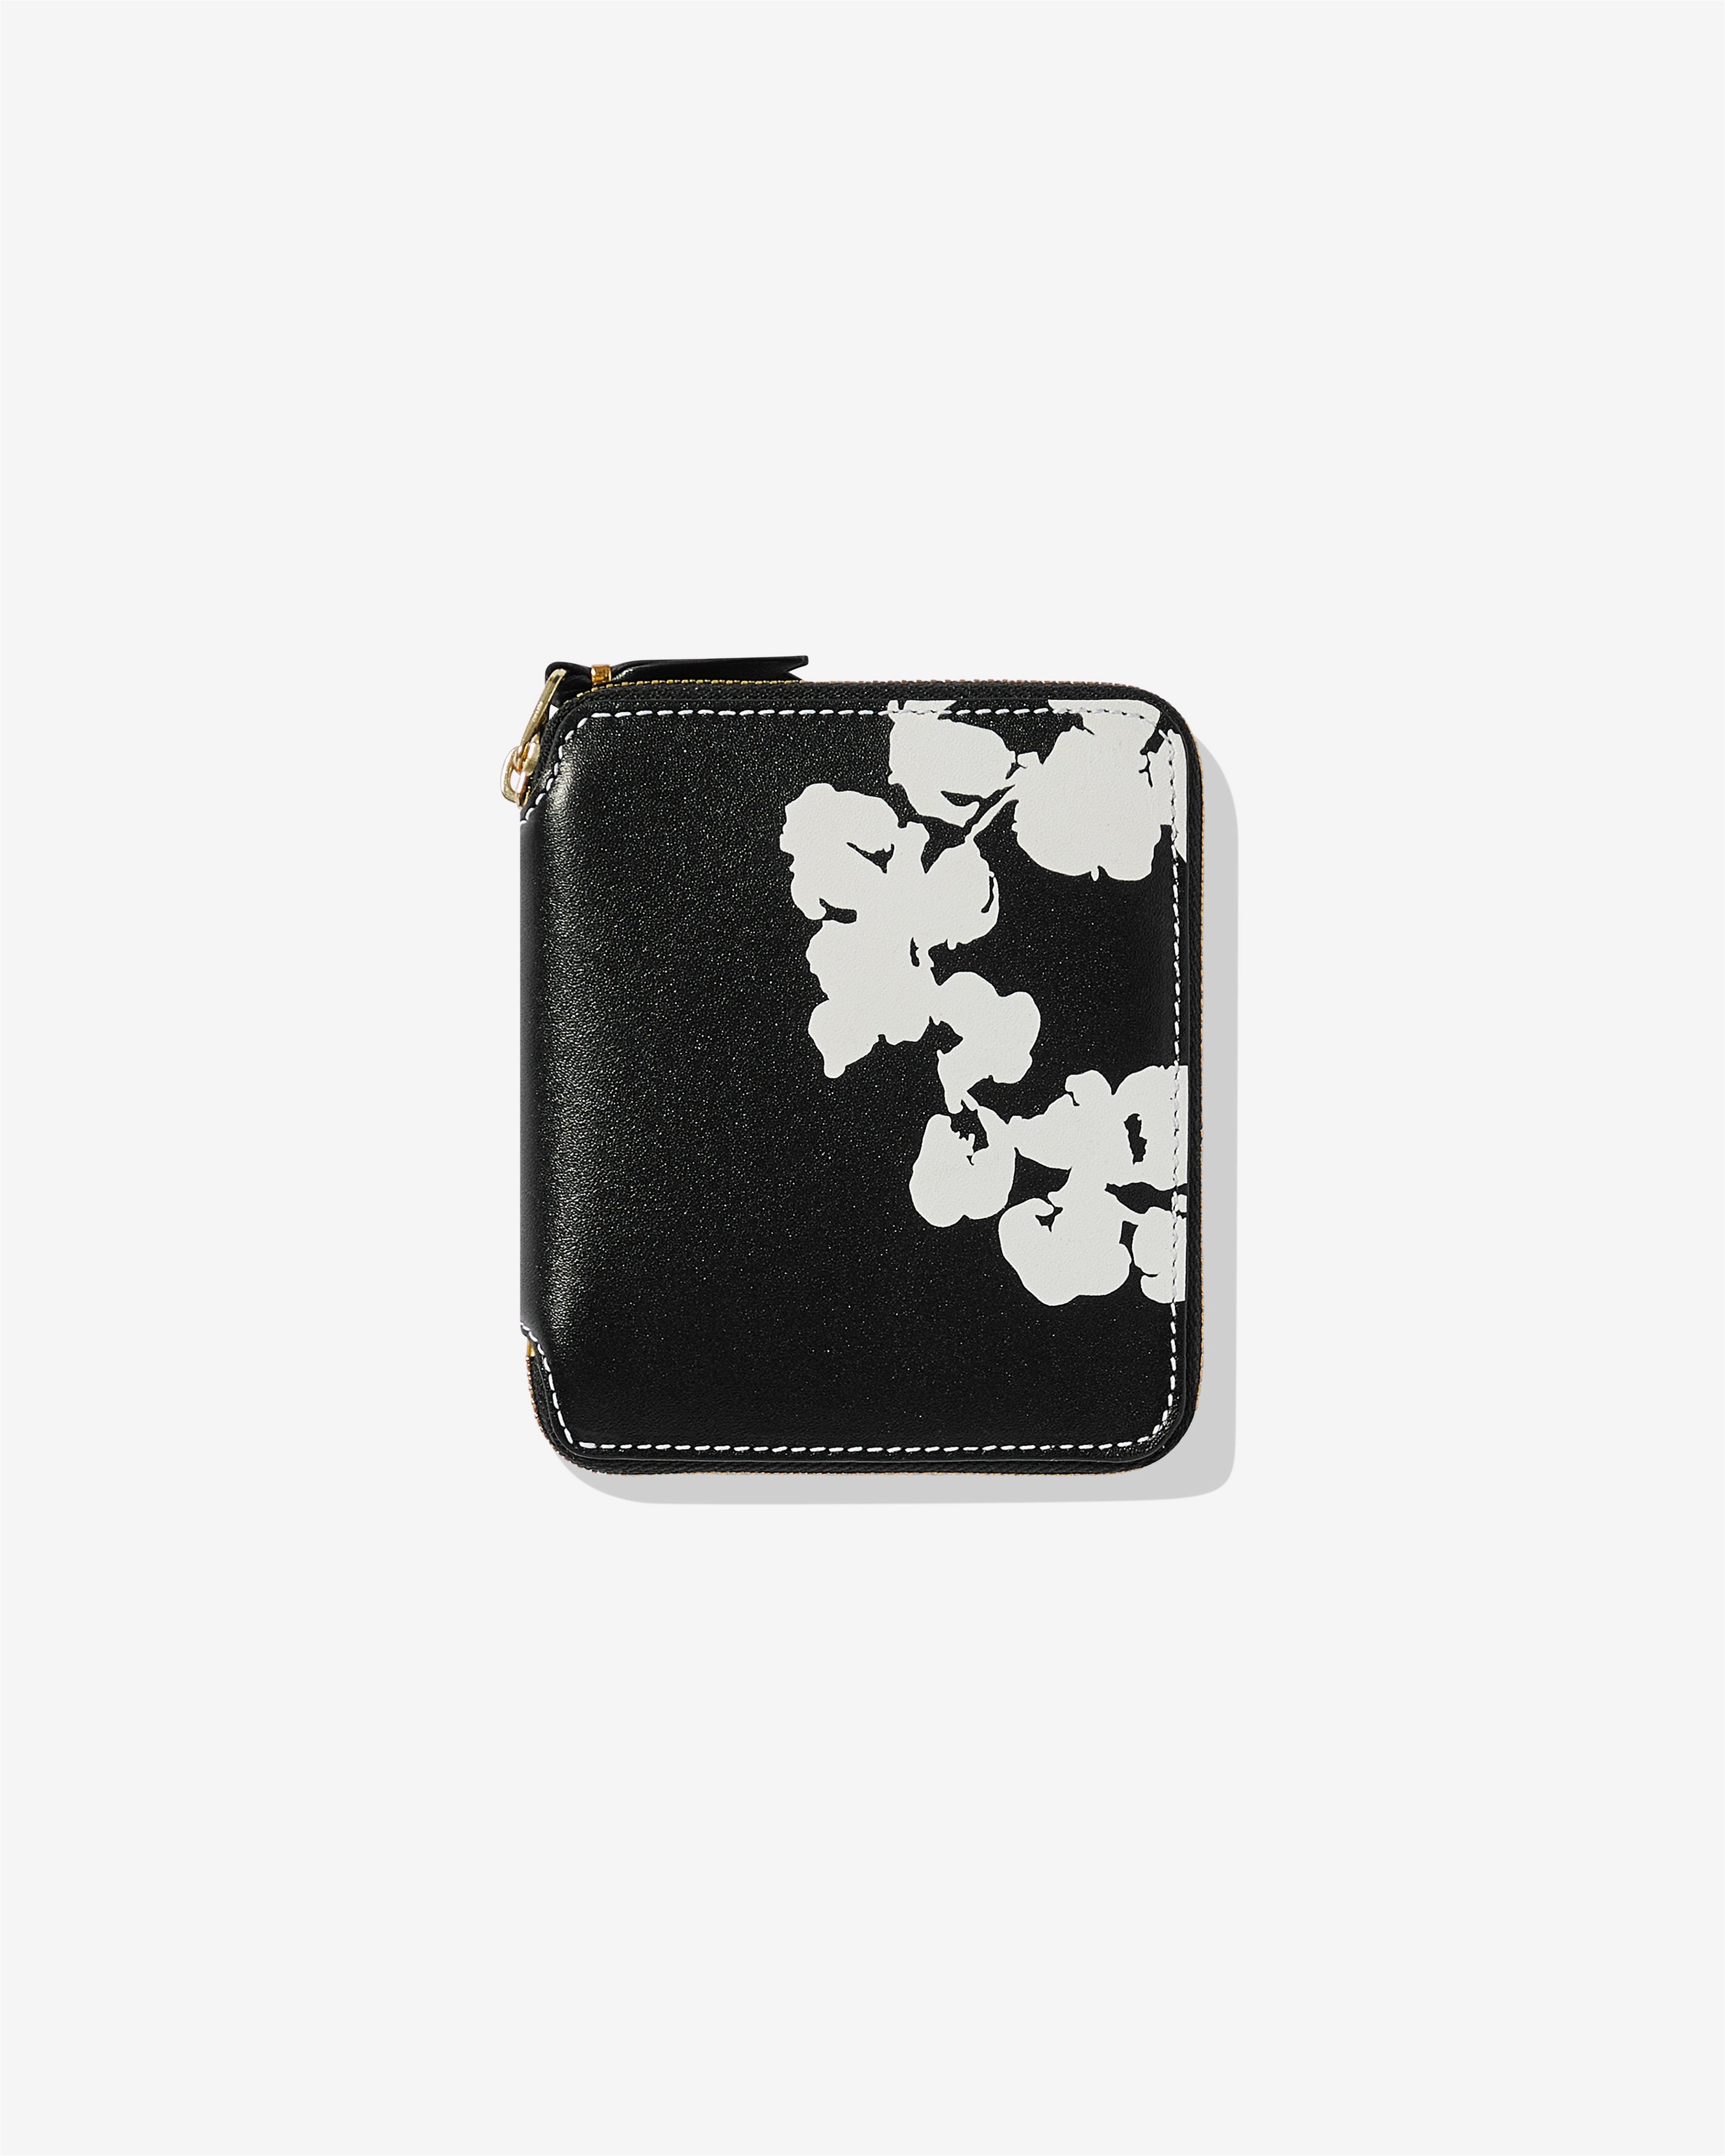 CDG Wallet - Denim Tears Wreath Full Zip Around Wallet - (Black) SA2100 by COMME DES GARCONS